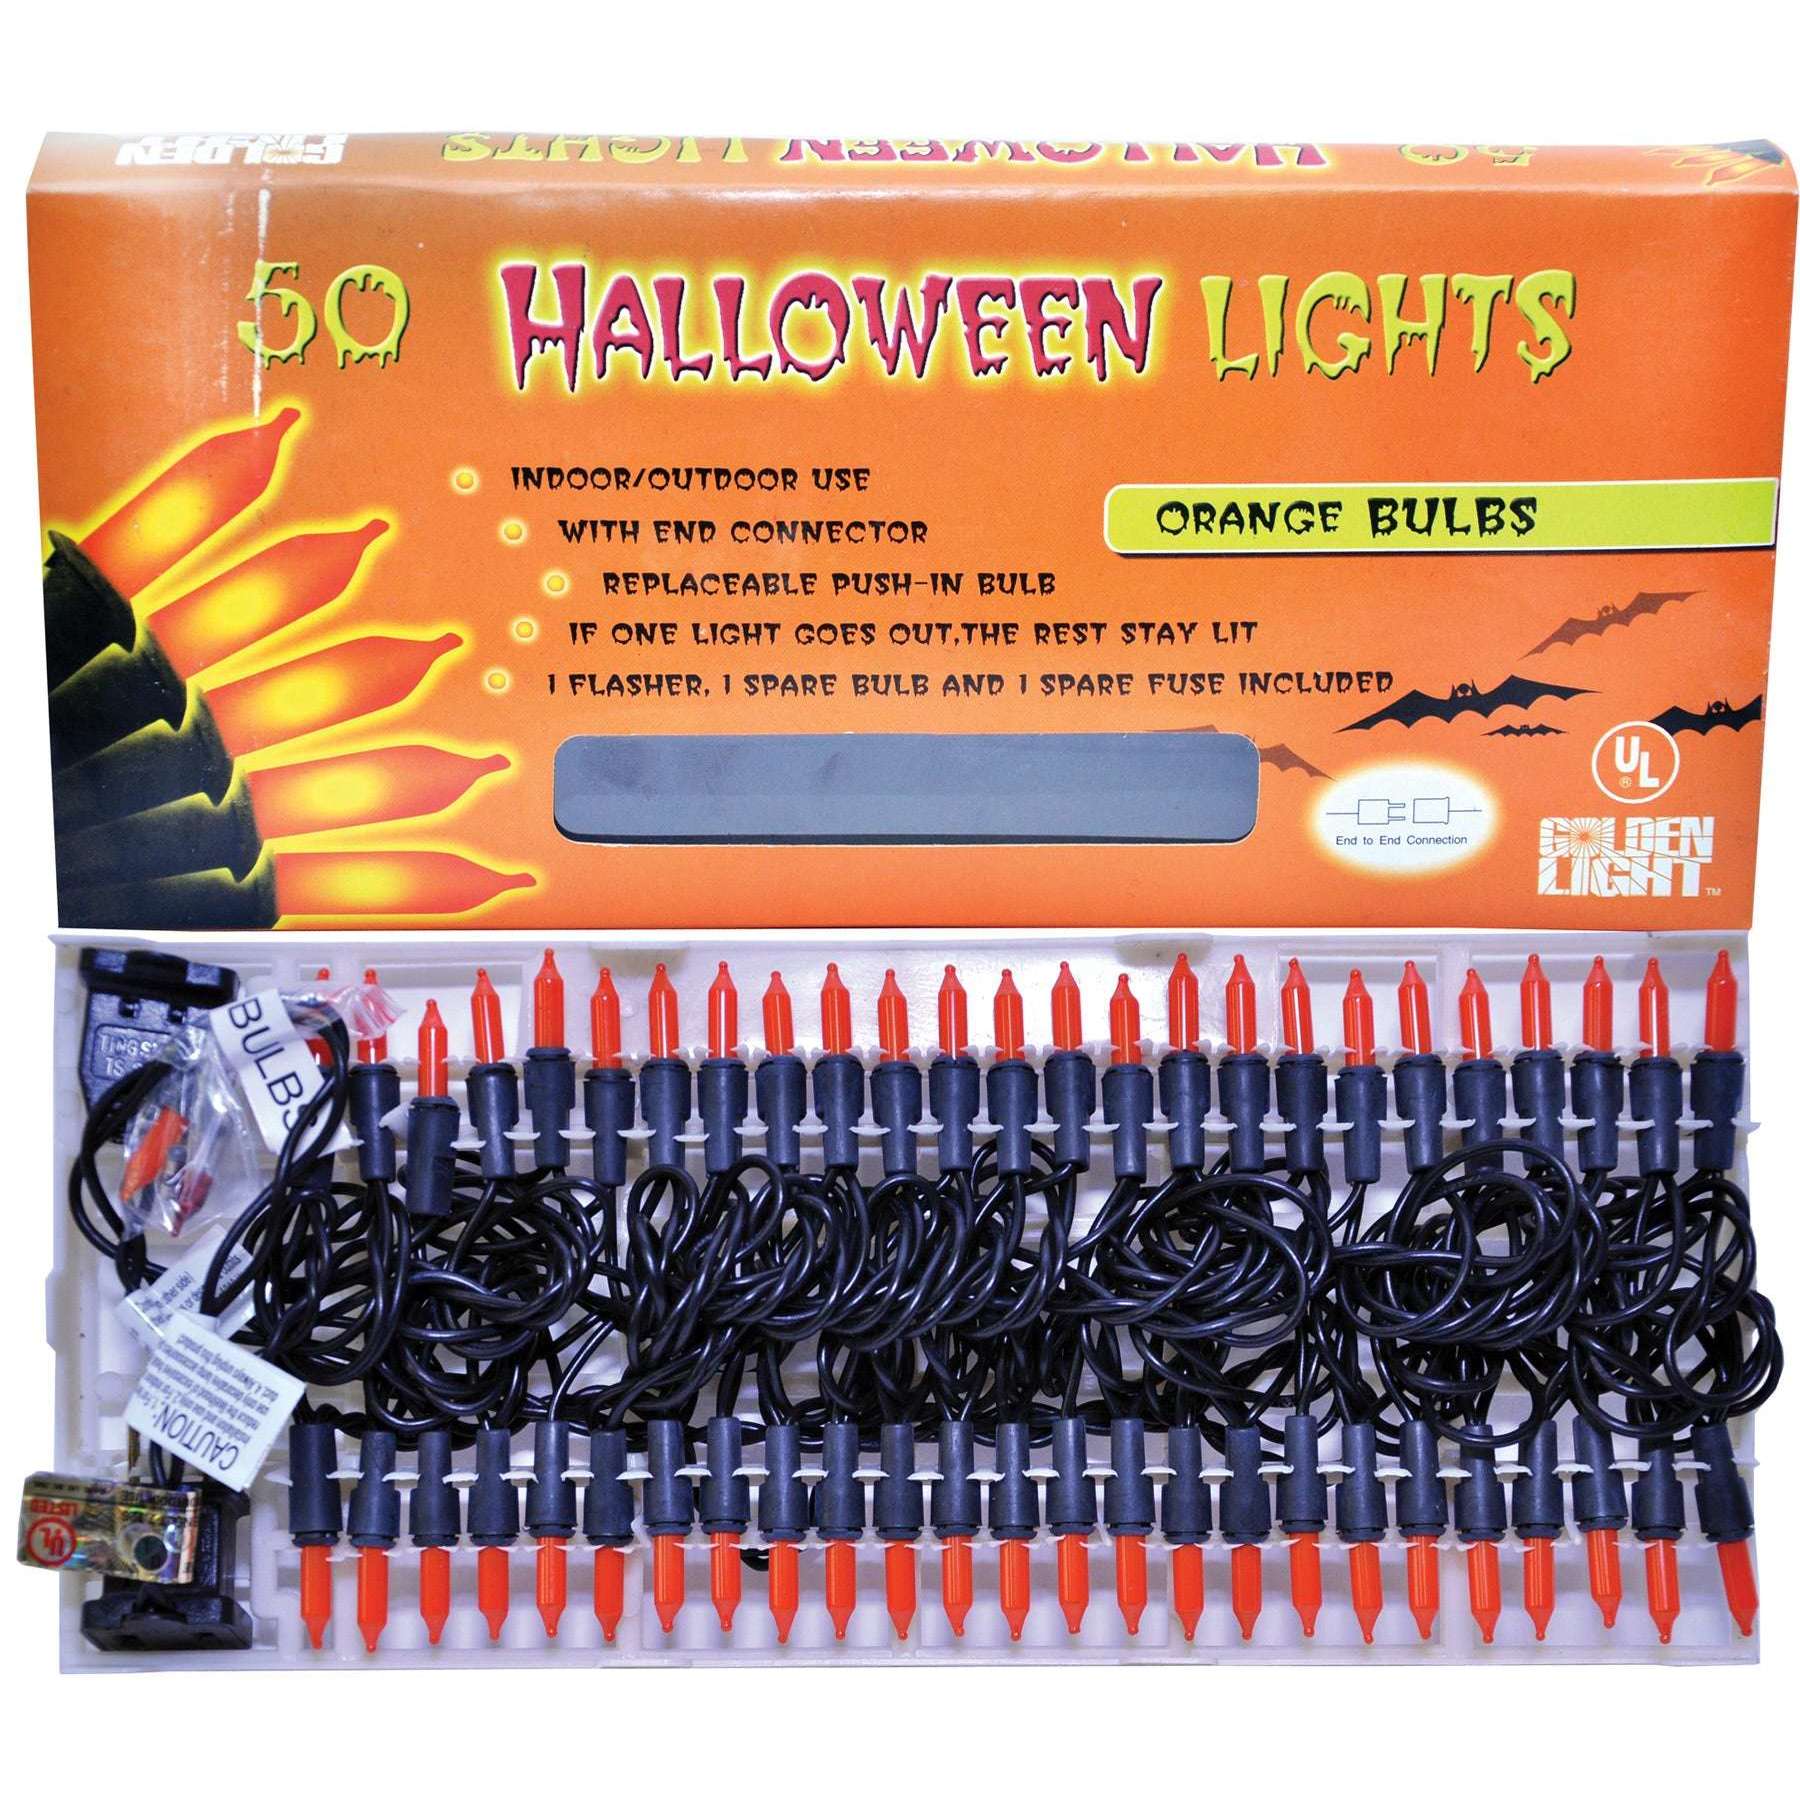 50-Count Orange Halloween Lights with Connector